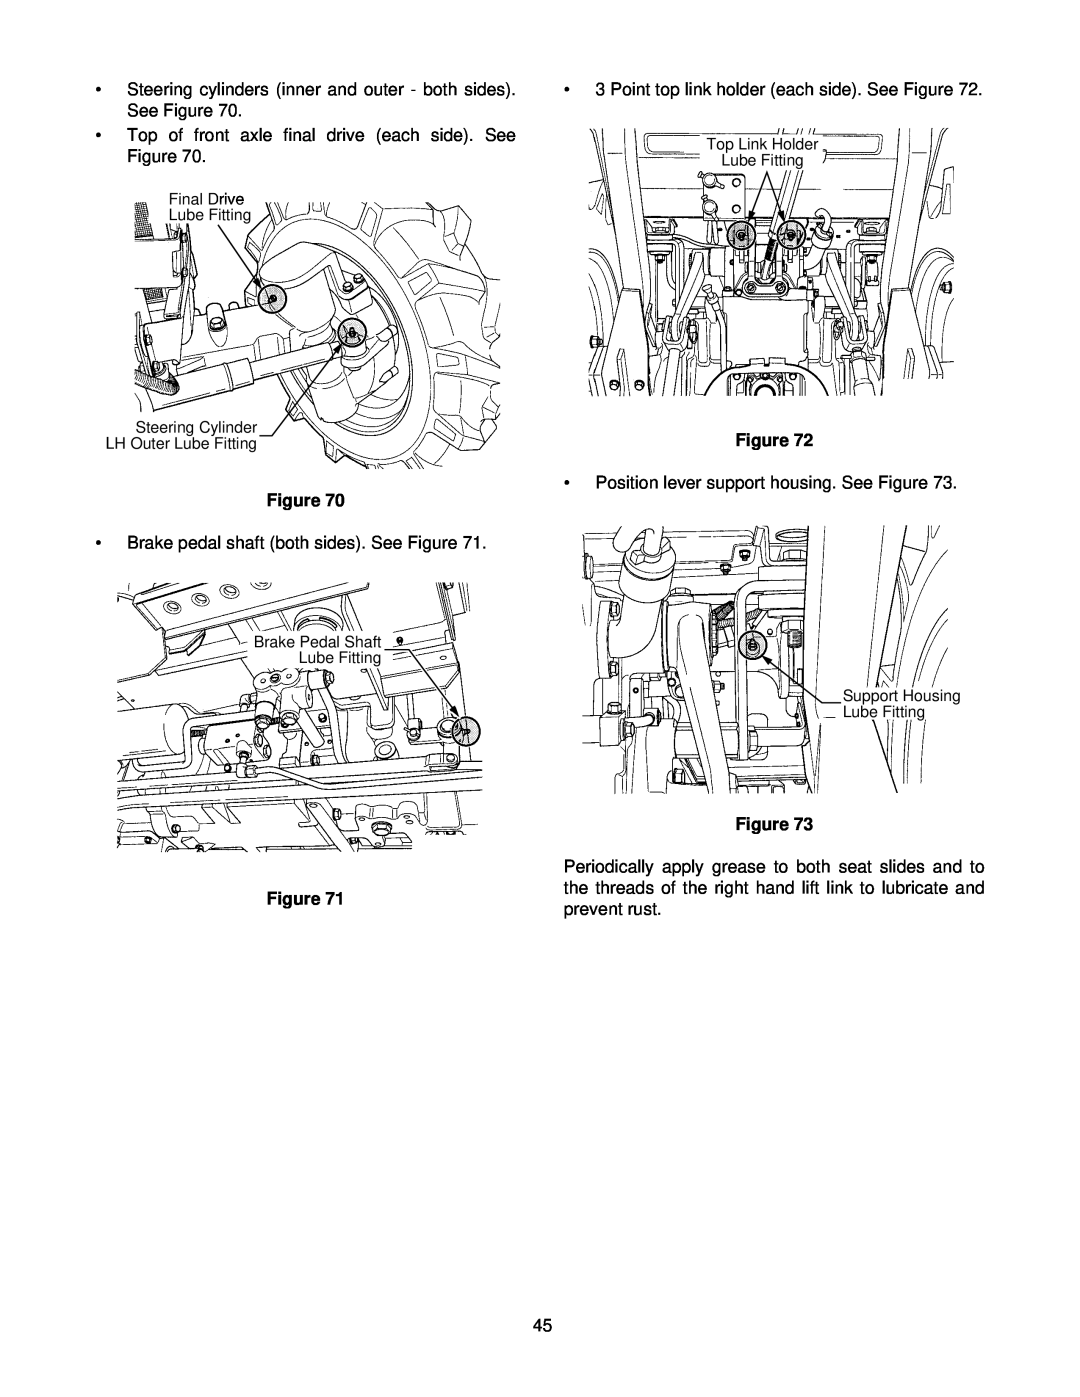 Cub Cadet 8354 manual •Brake pedal shaft both sides. See Figure 